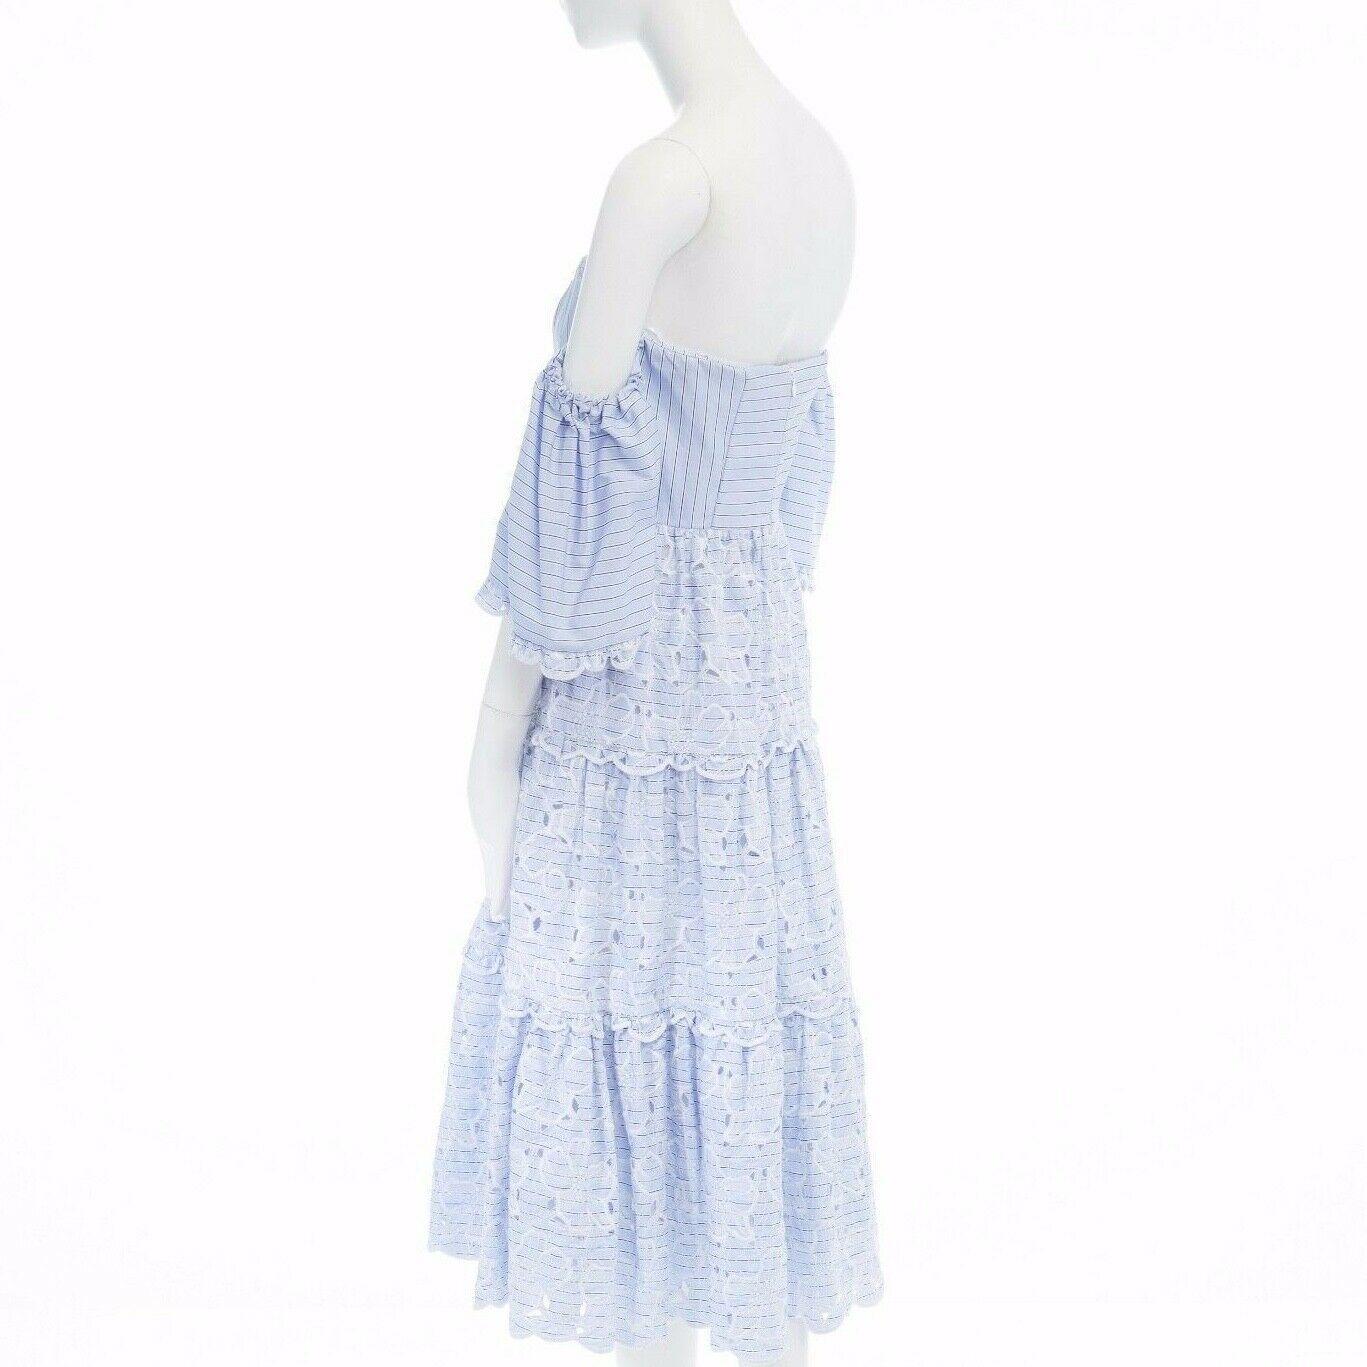 new ERDEM Runway blue striped cotton floral embroidery off shoulder dress US4 S 3